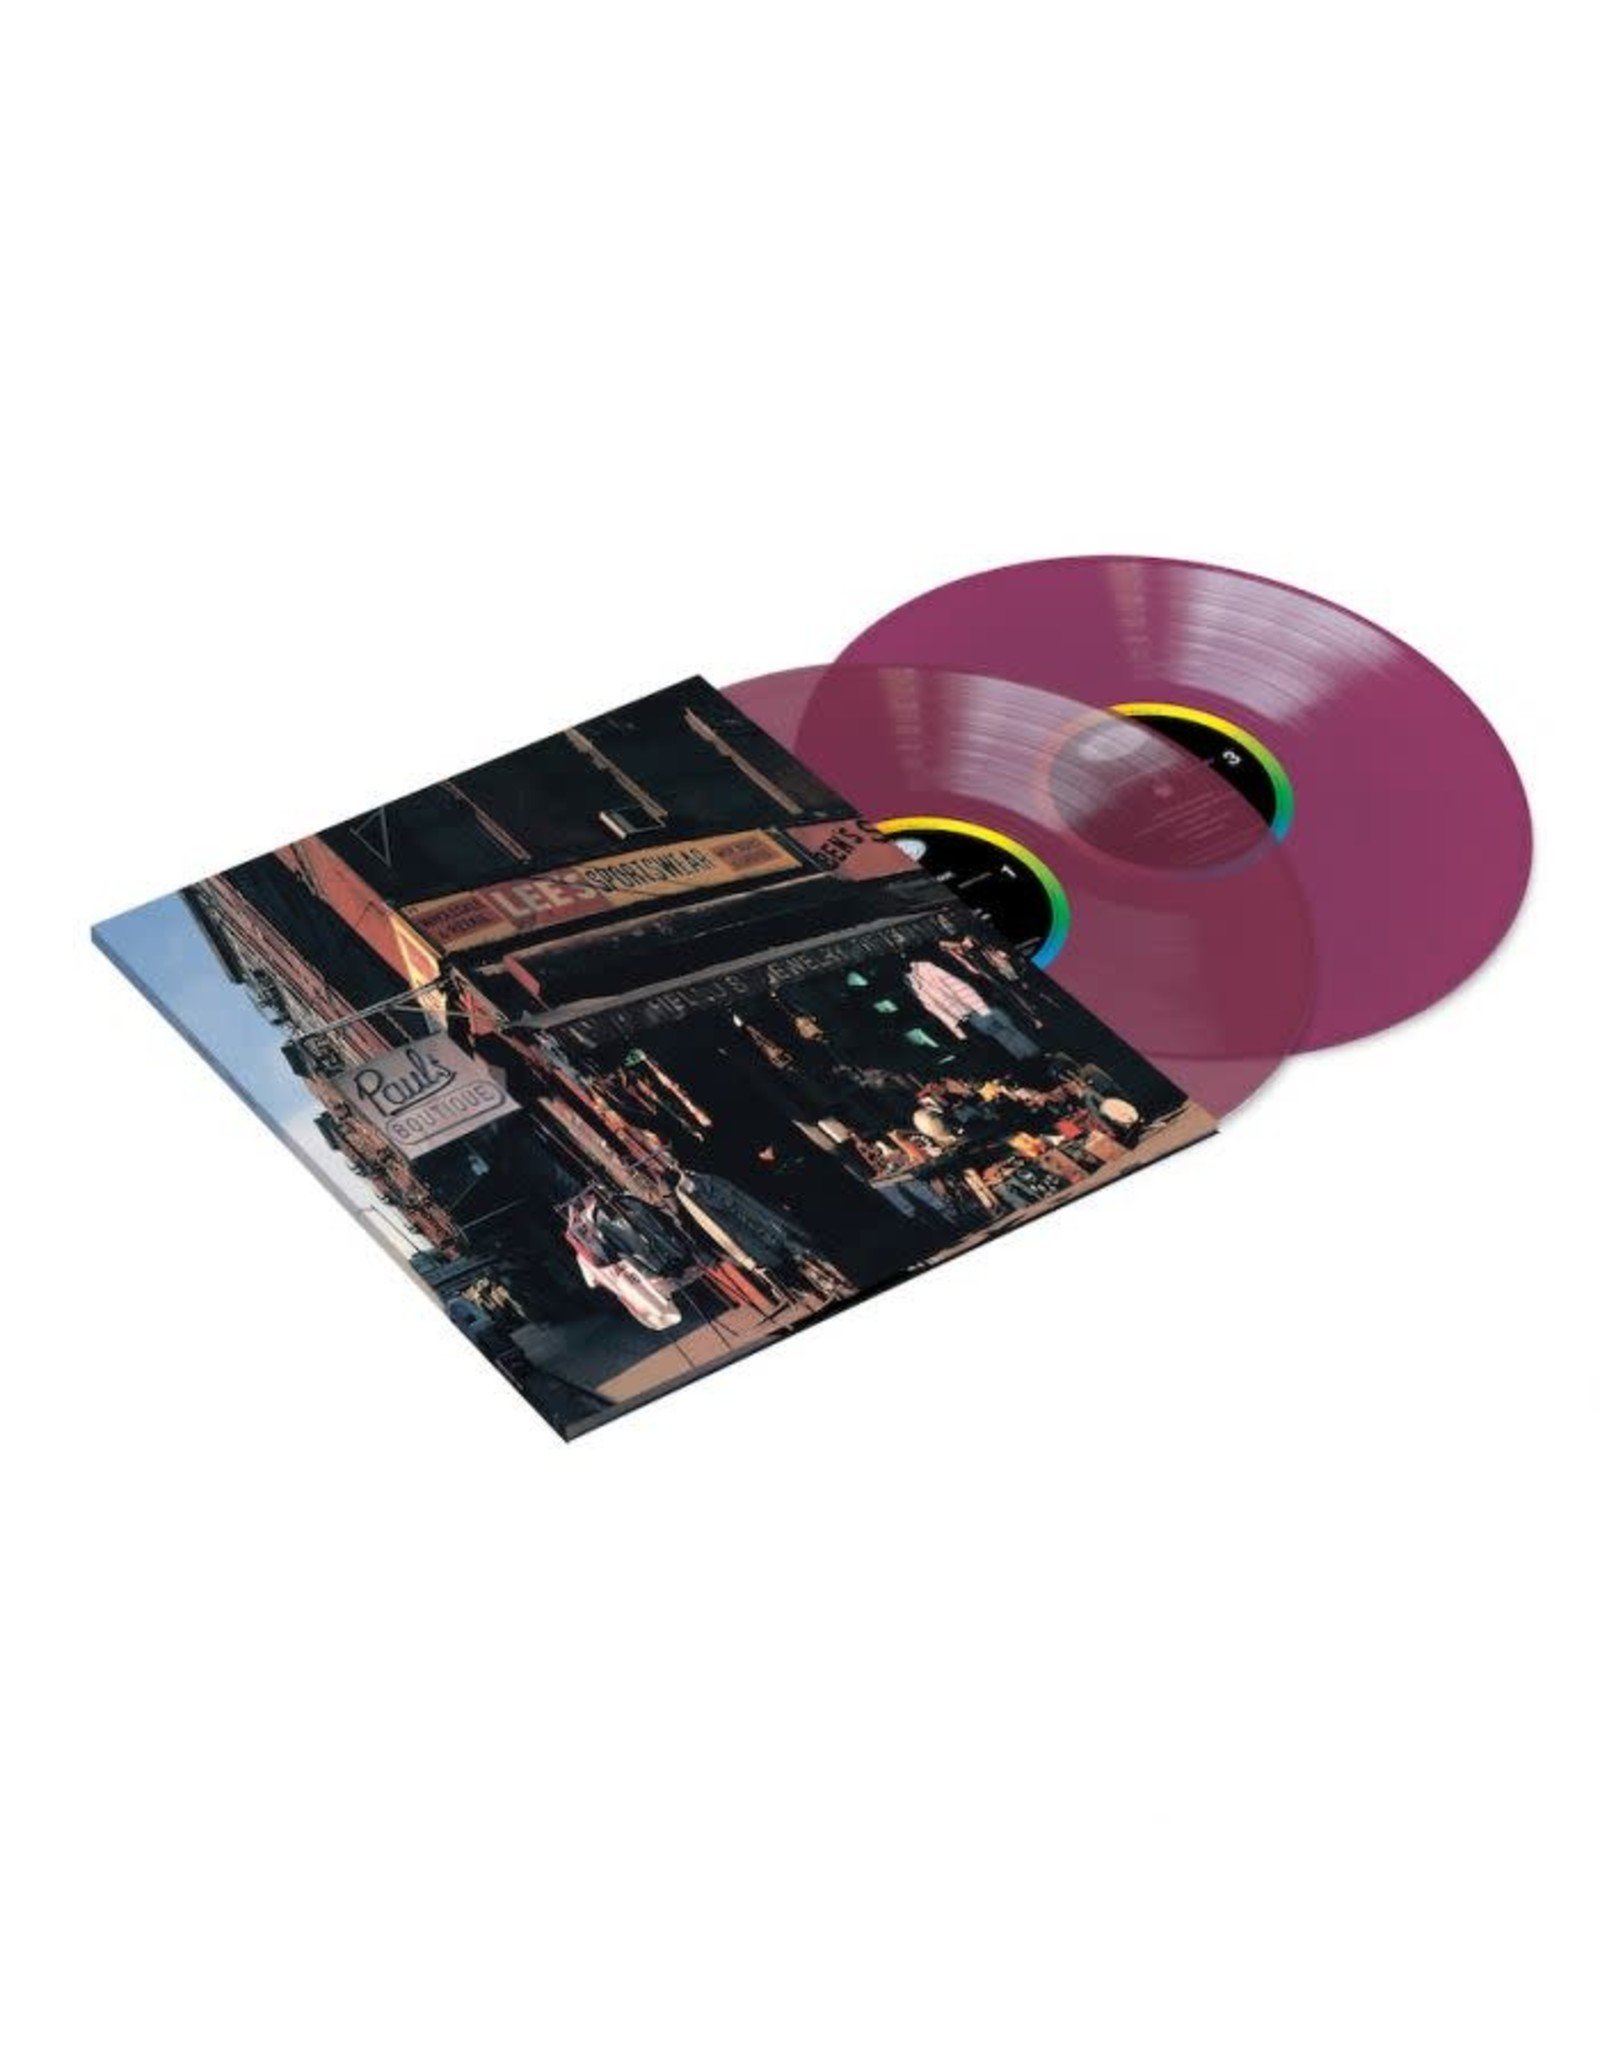 Beastie Boys Beastie Boys - Paul's Boutique [2LP, Violet Vinyl]